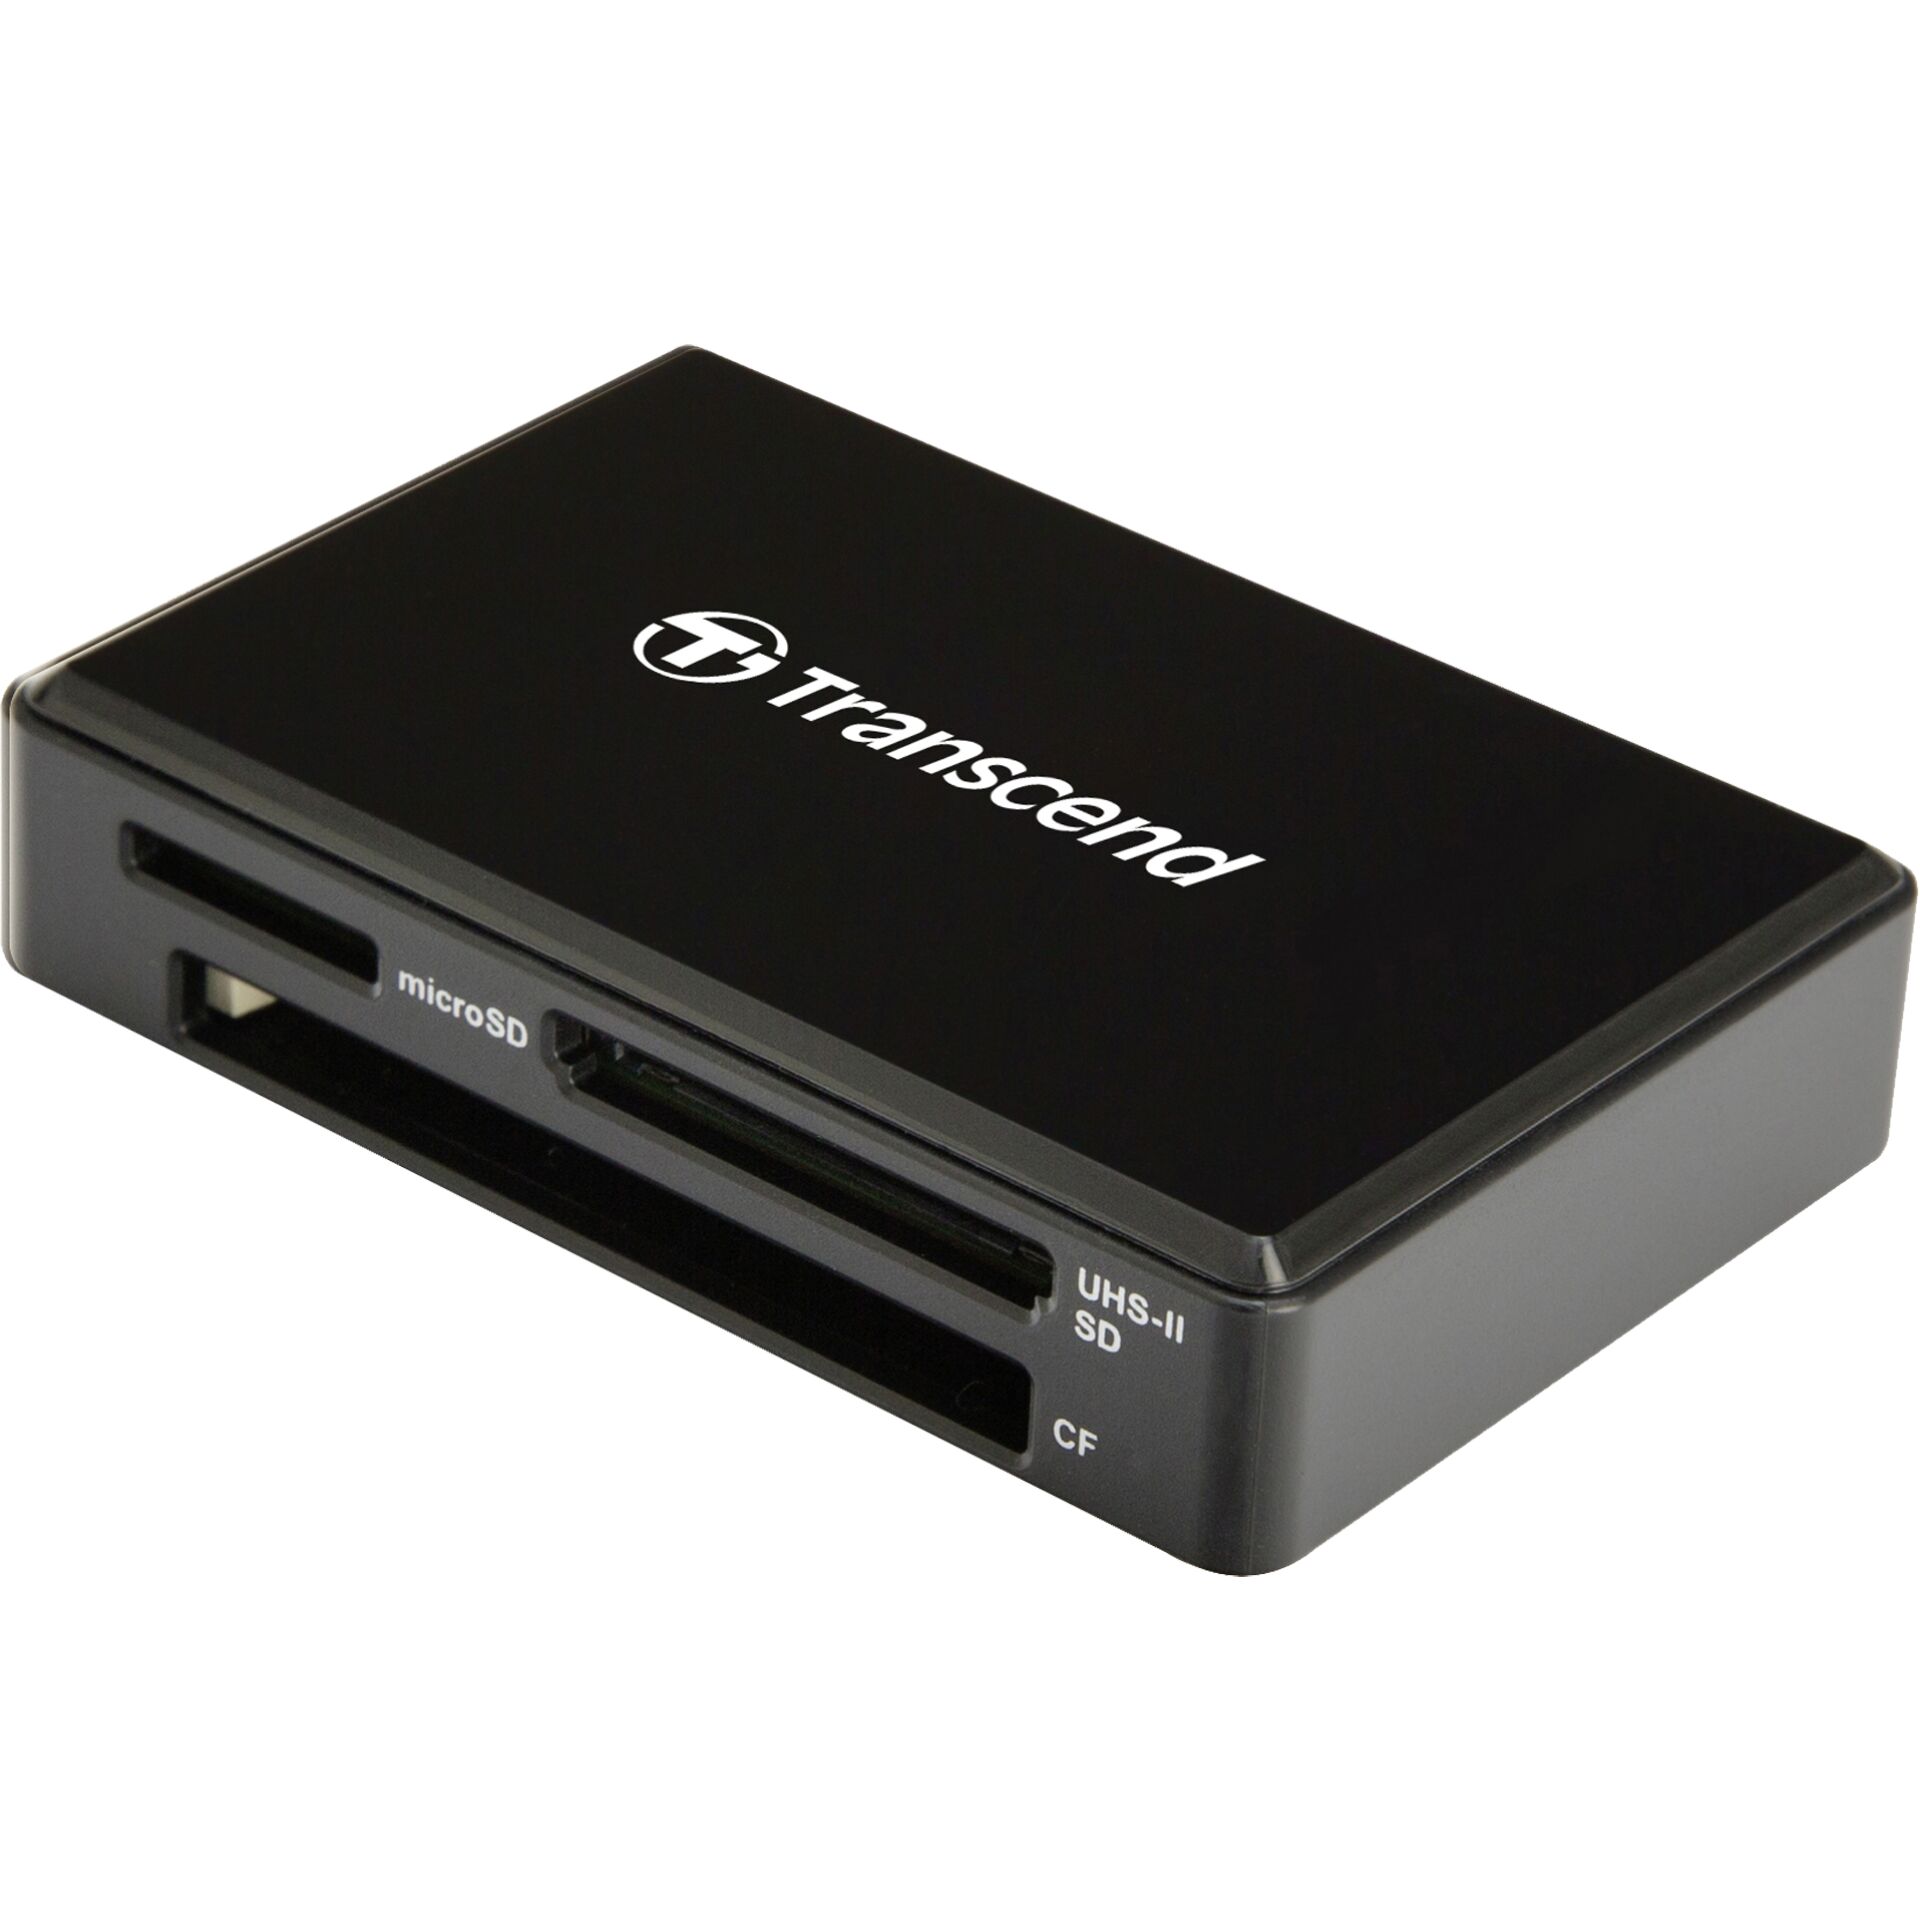 Transcend RDF9 v2 schwarz Multi-Slot-Cardreader, USB 3.0 Micro-B [Buchse]